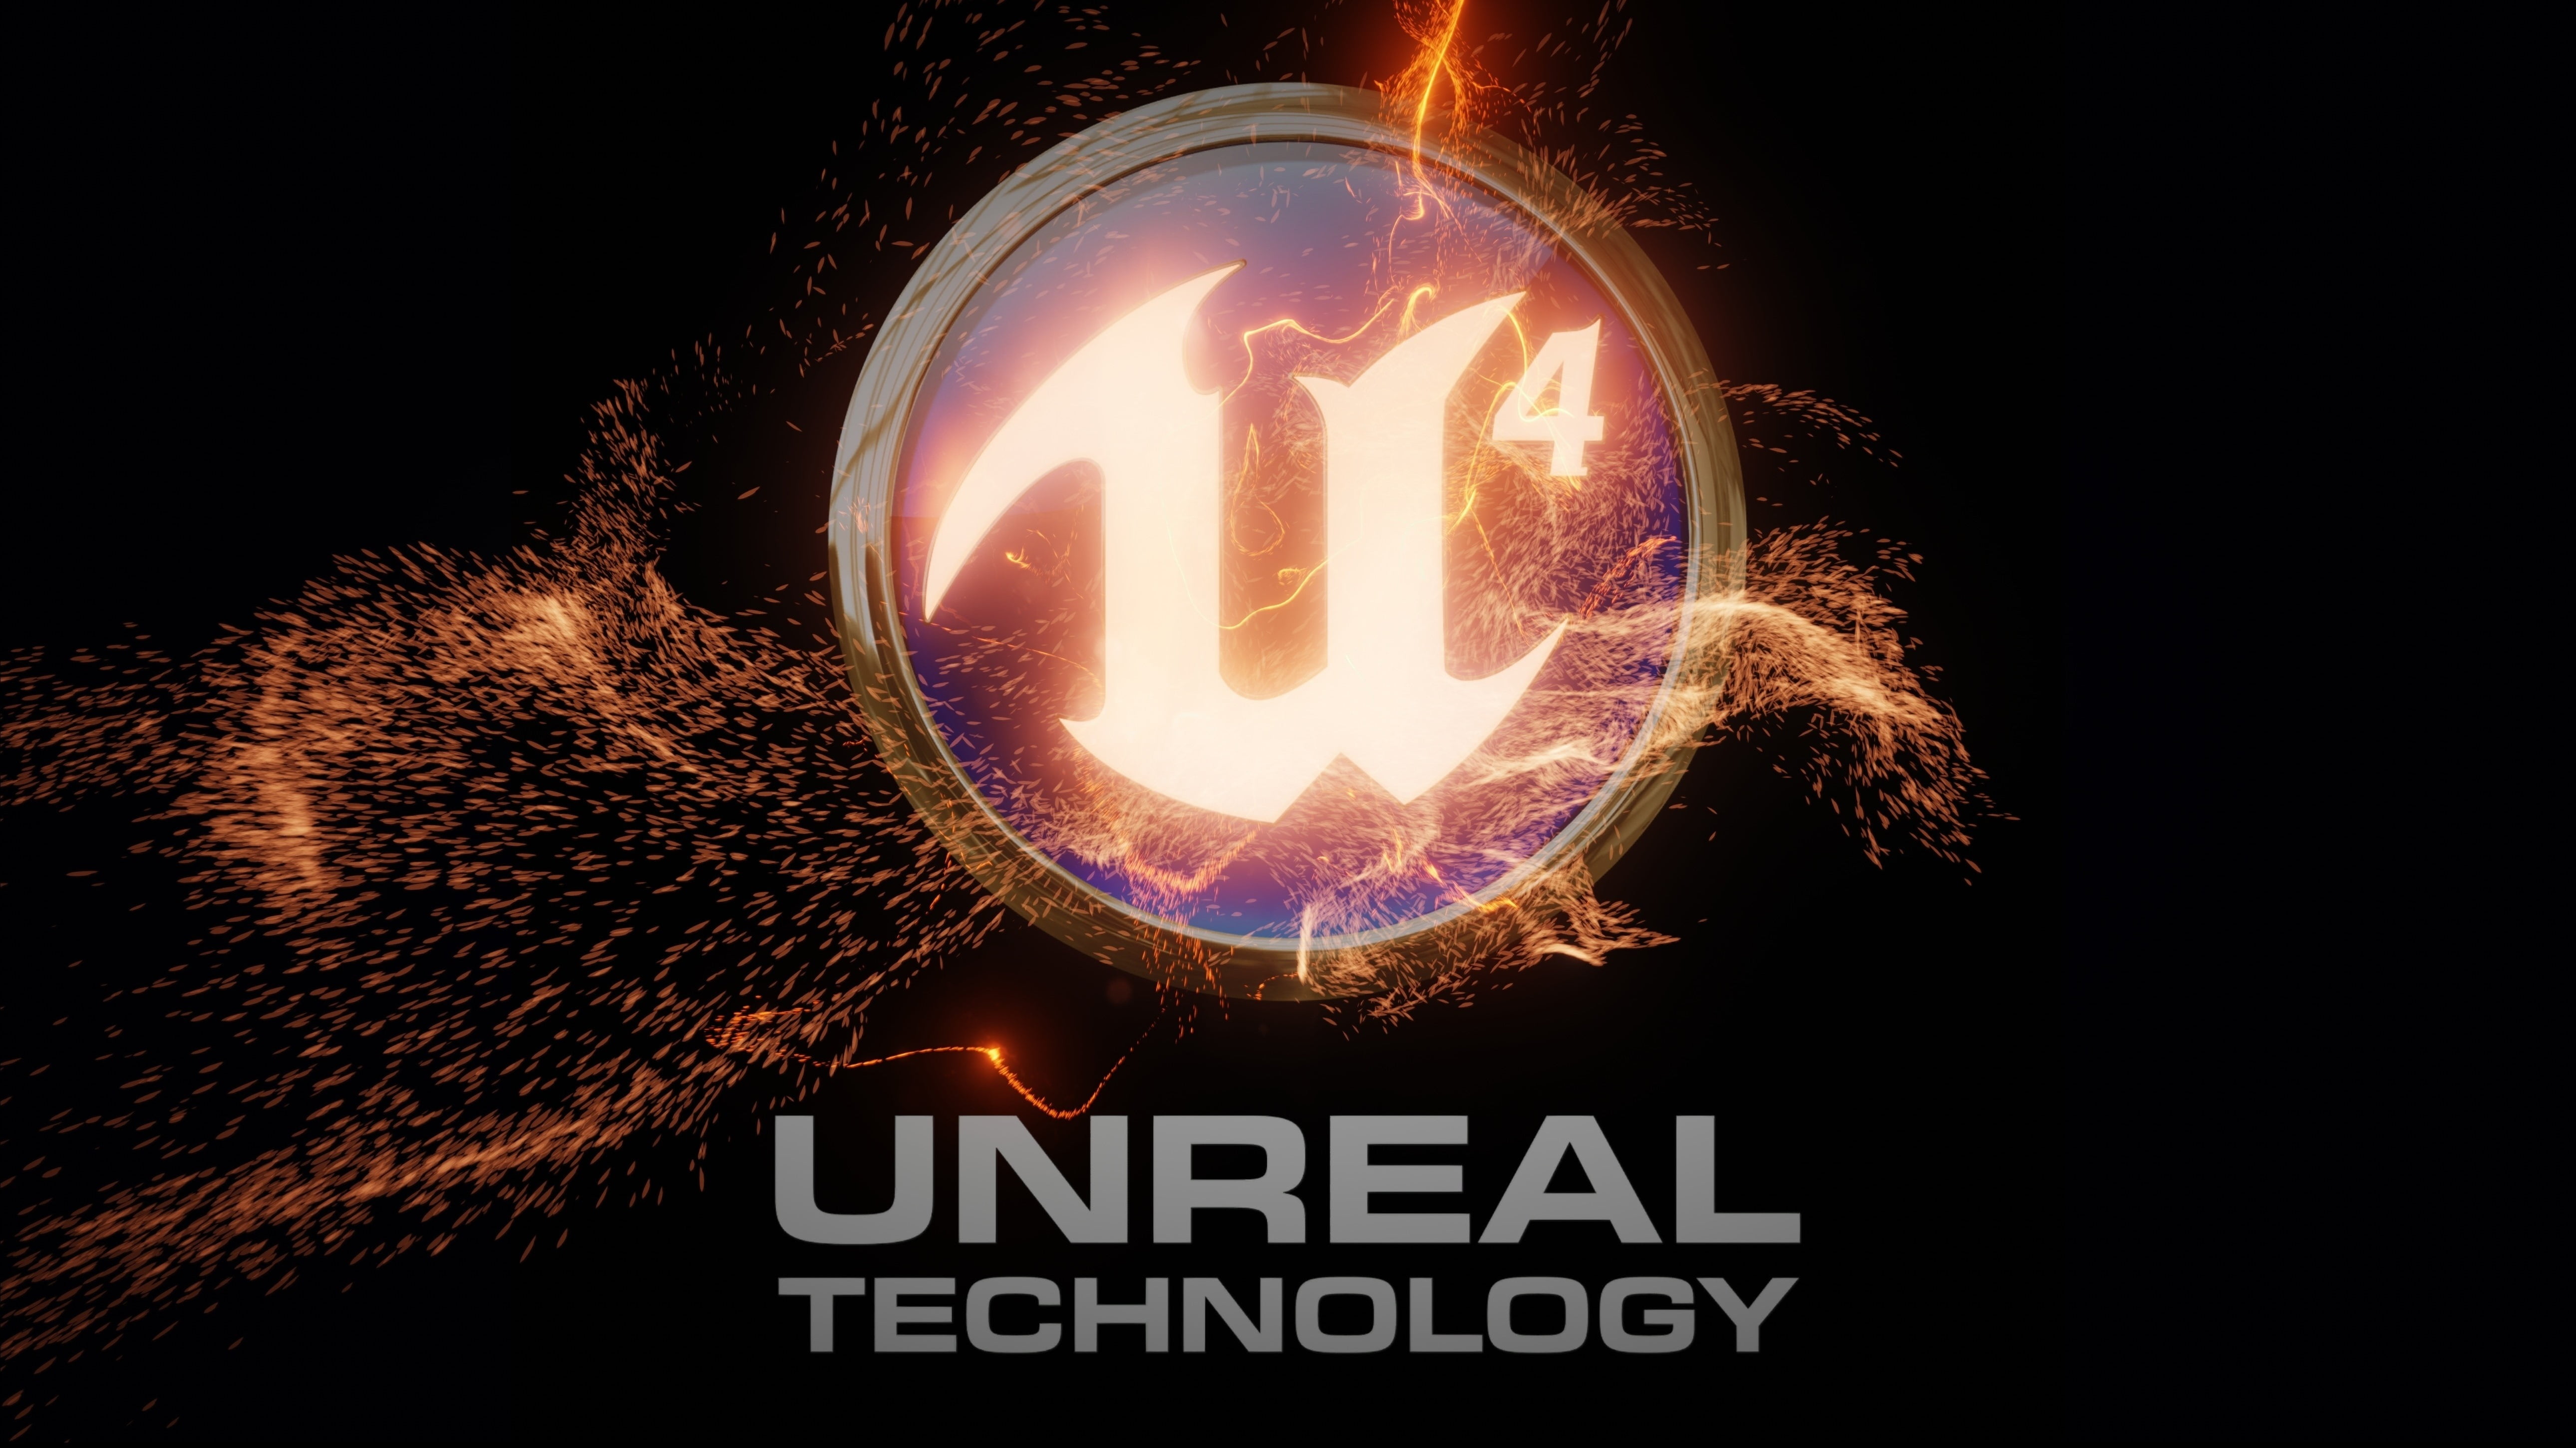 Unreal Technology logo, flame, the inscription, emblem, unreal engine 4